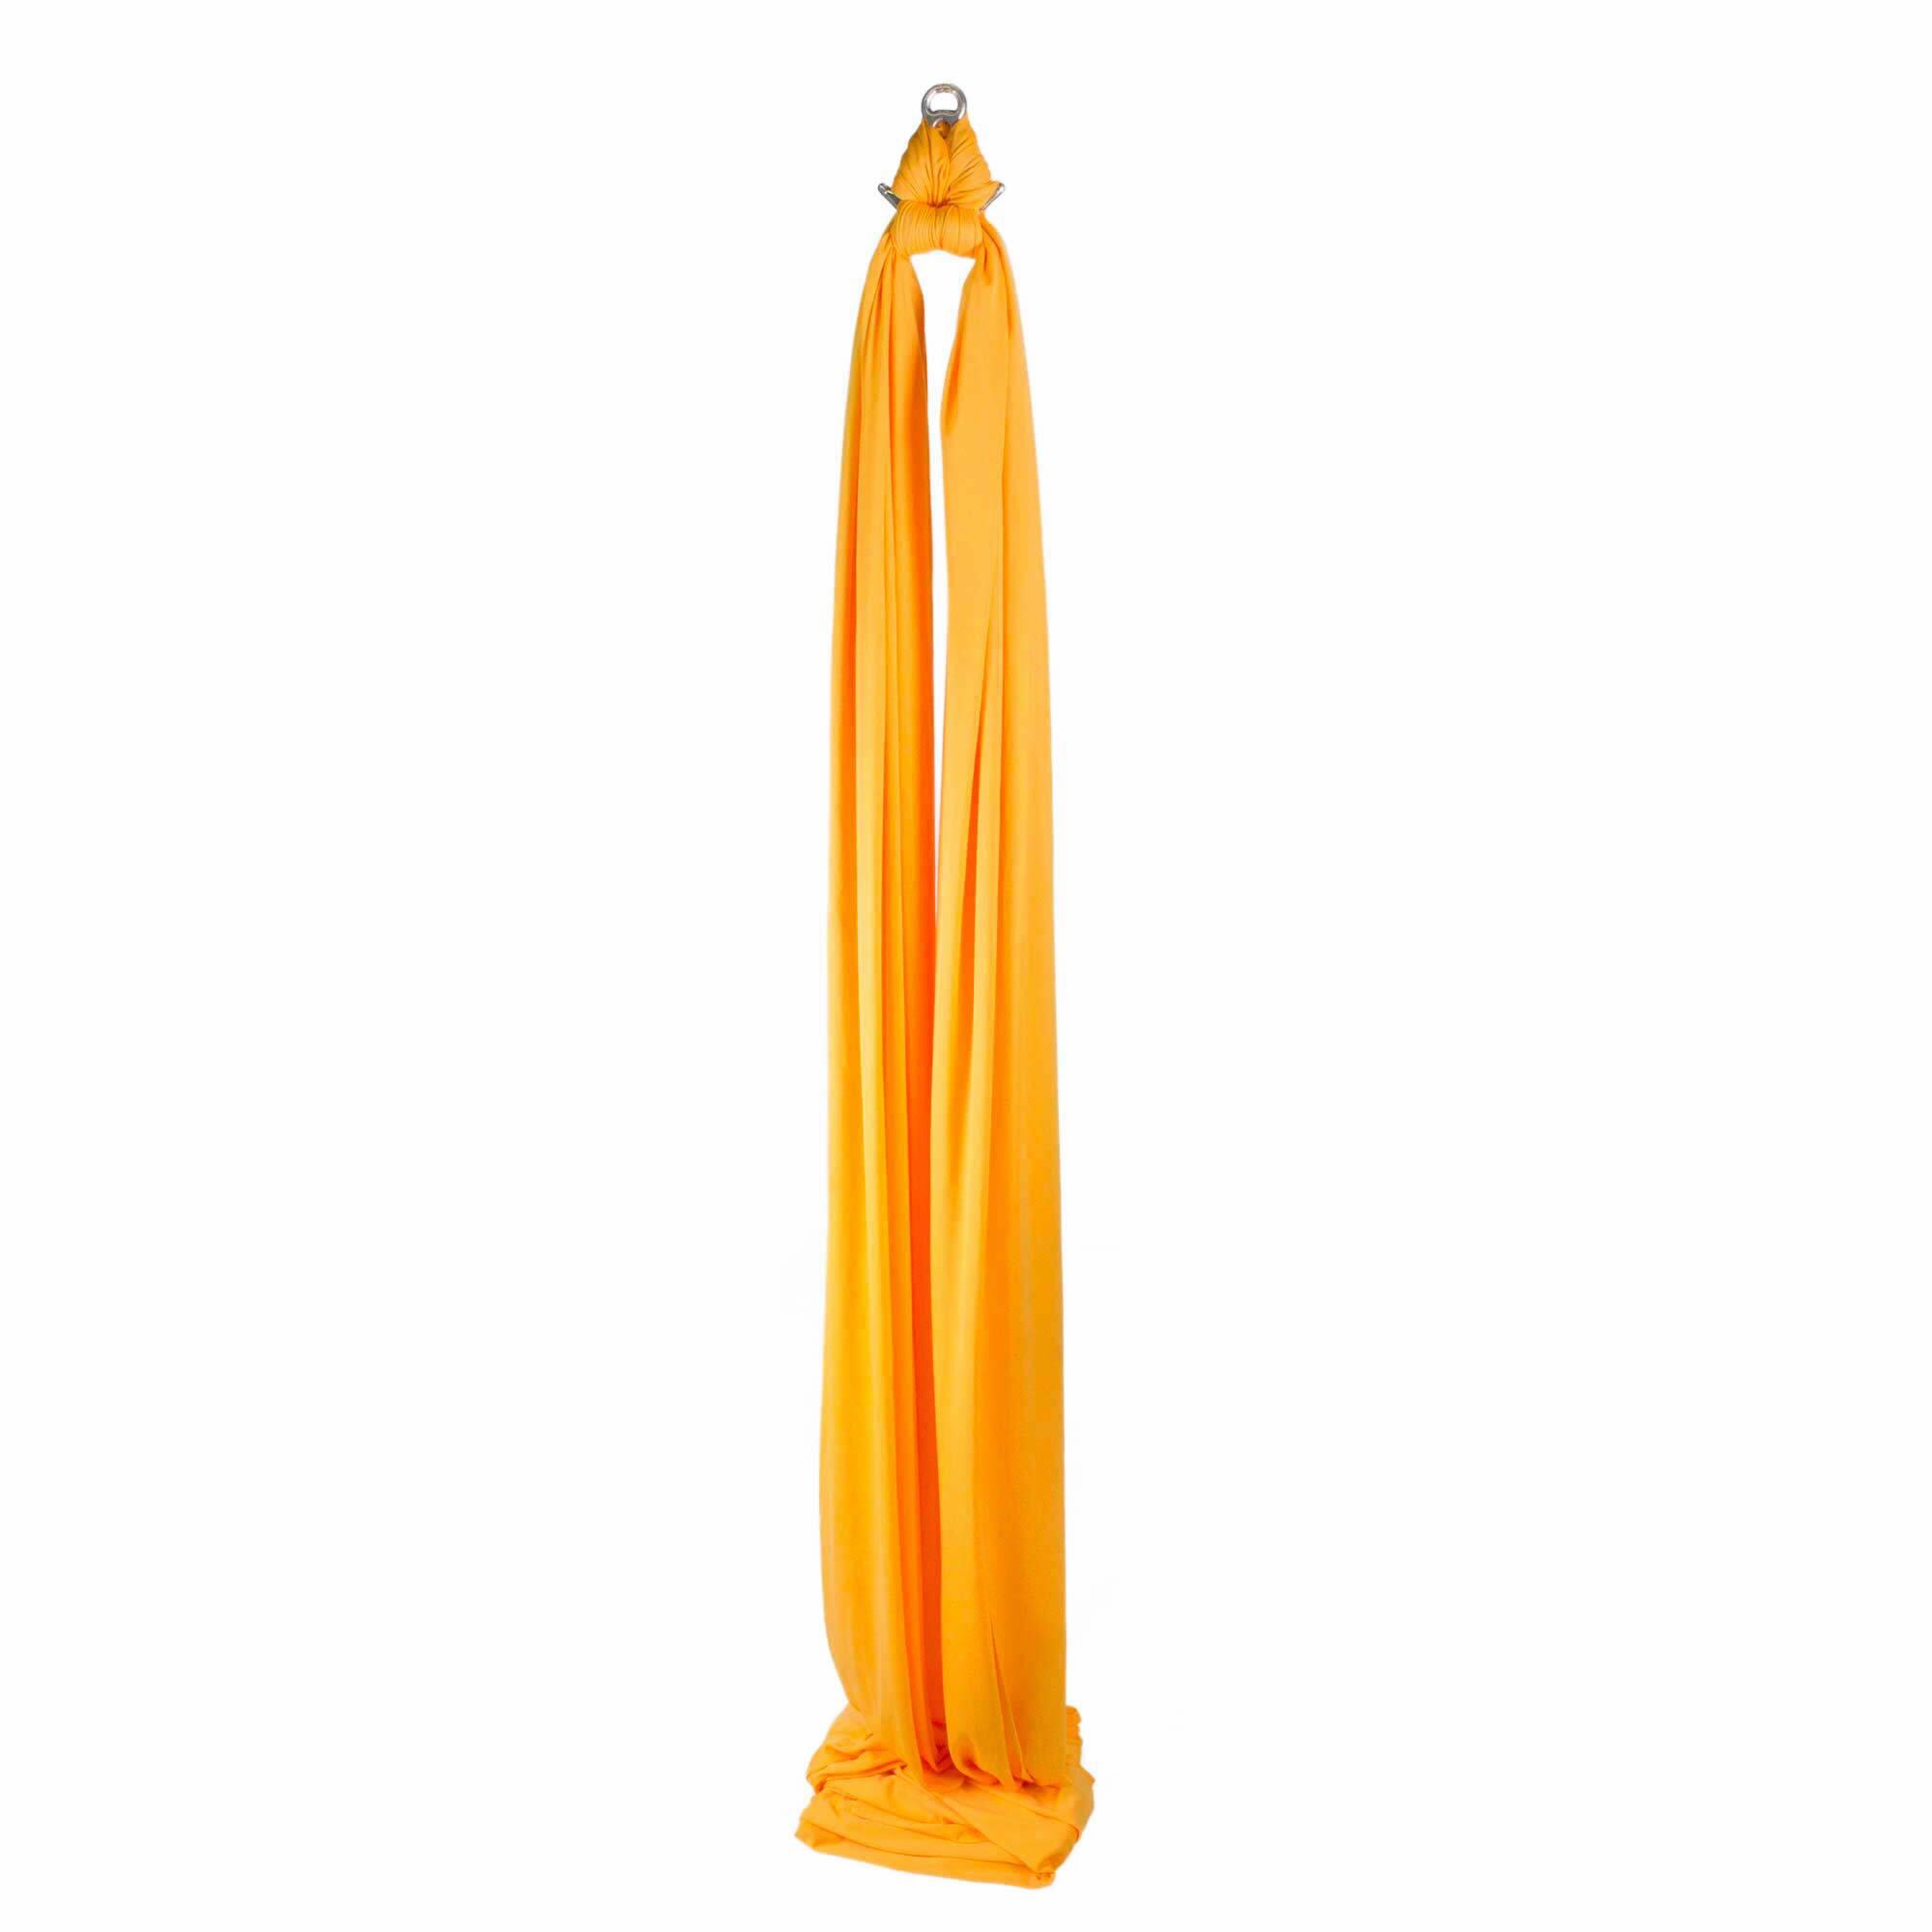 FIRETOYS Firetoys Aerial Silk (Aerial Fabric / Tissus) - Golden Yellow